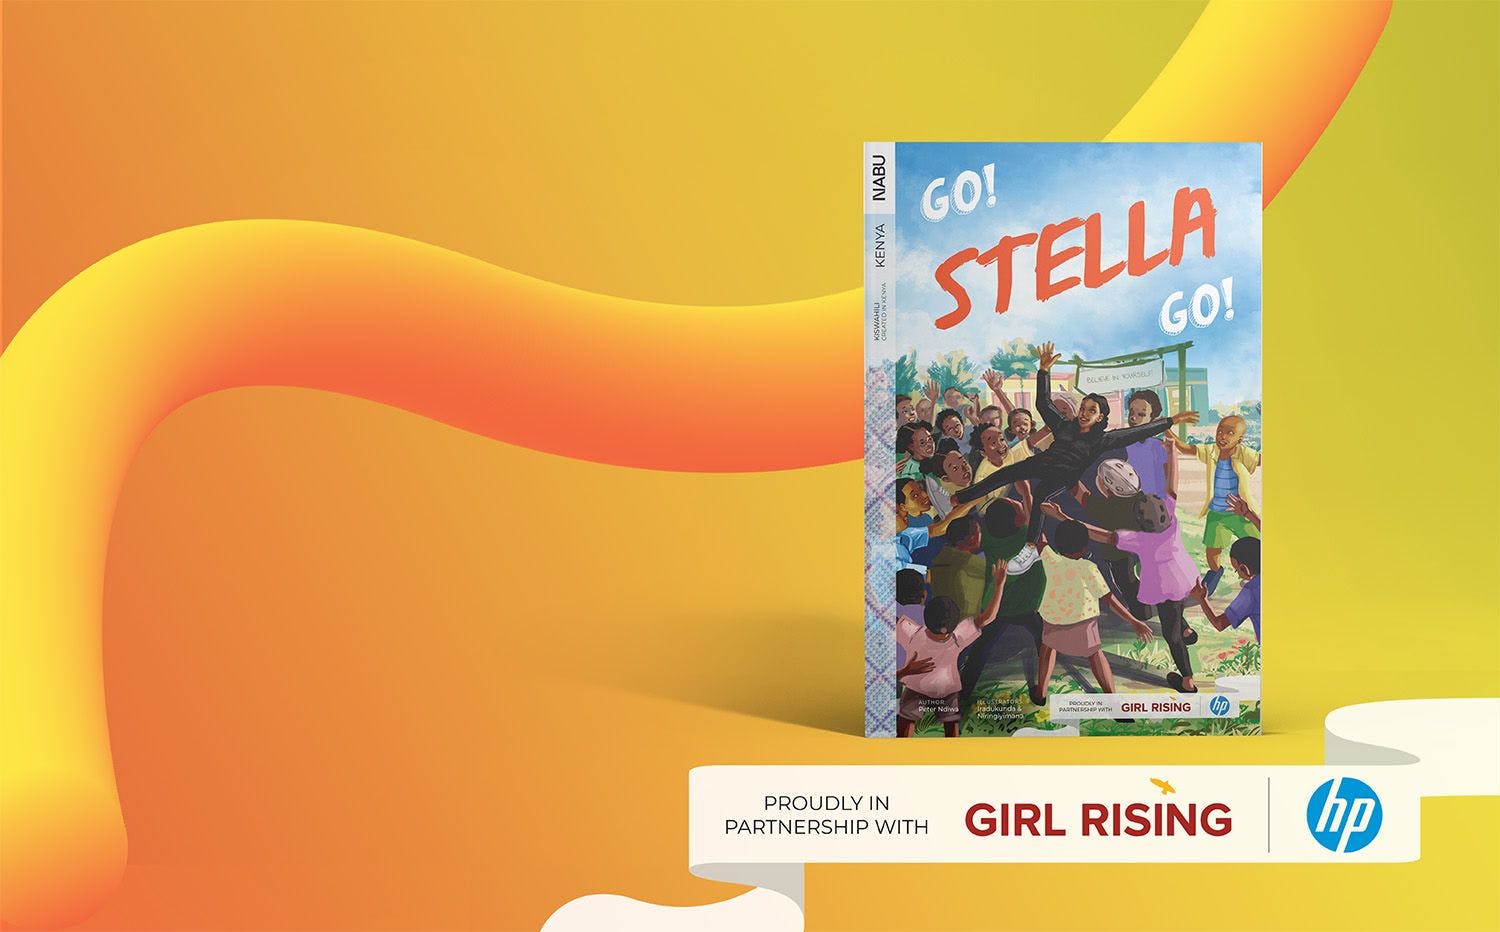 NABU “Go Stella Go!” Print books now available for Holidays!